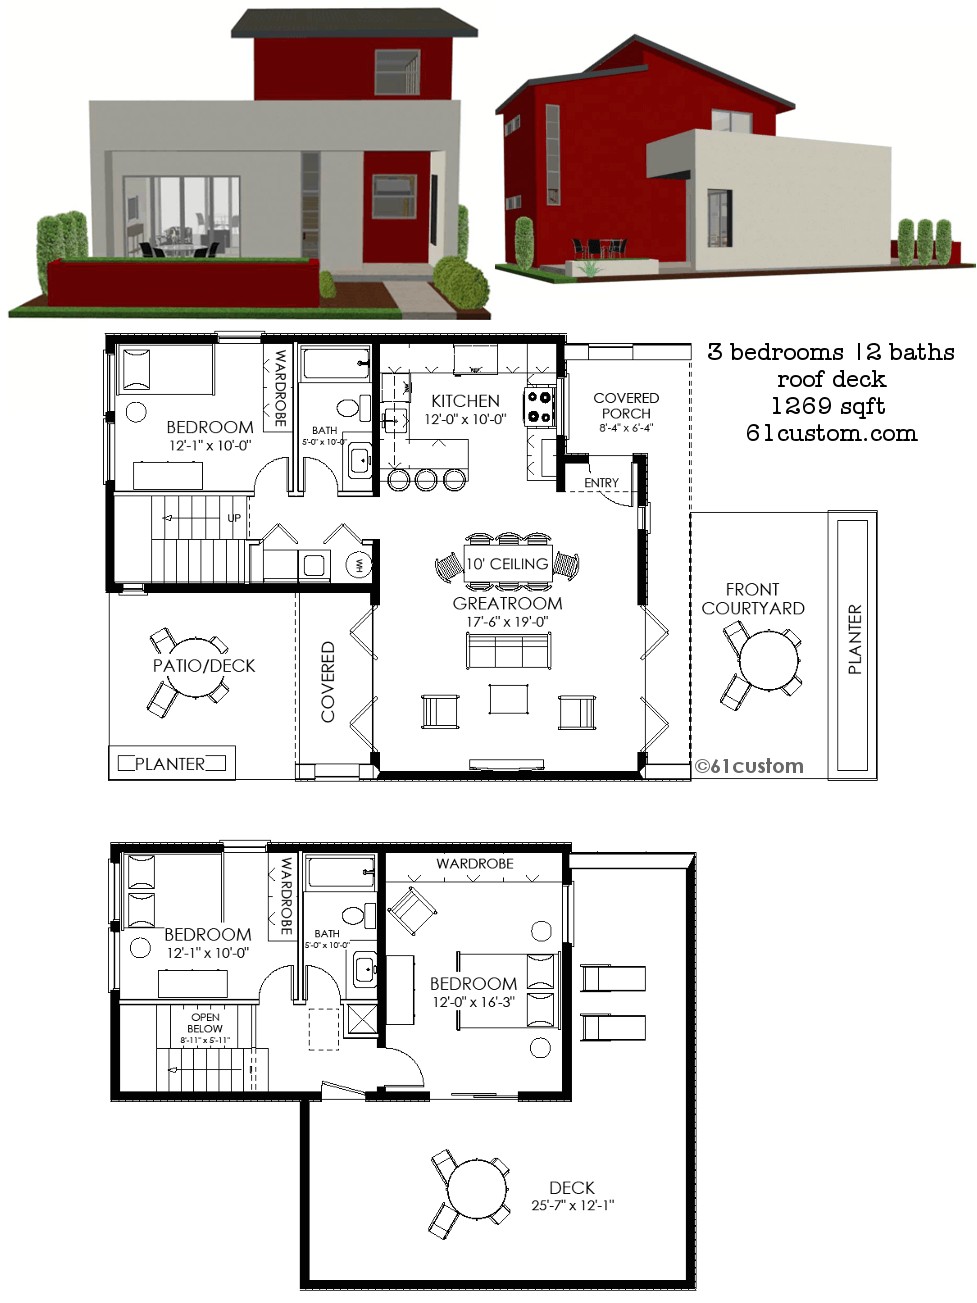 Modern Home Plan Contemporary Small House Plan 61custom Contemporary